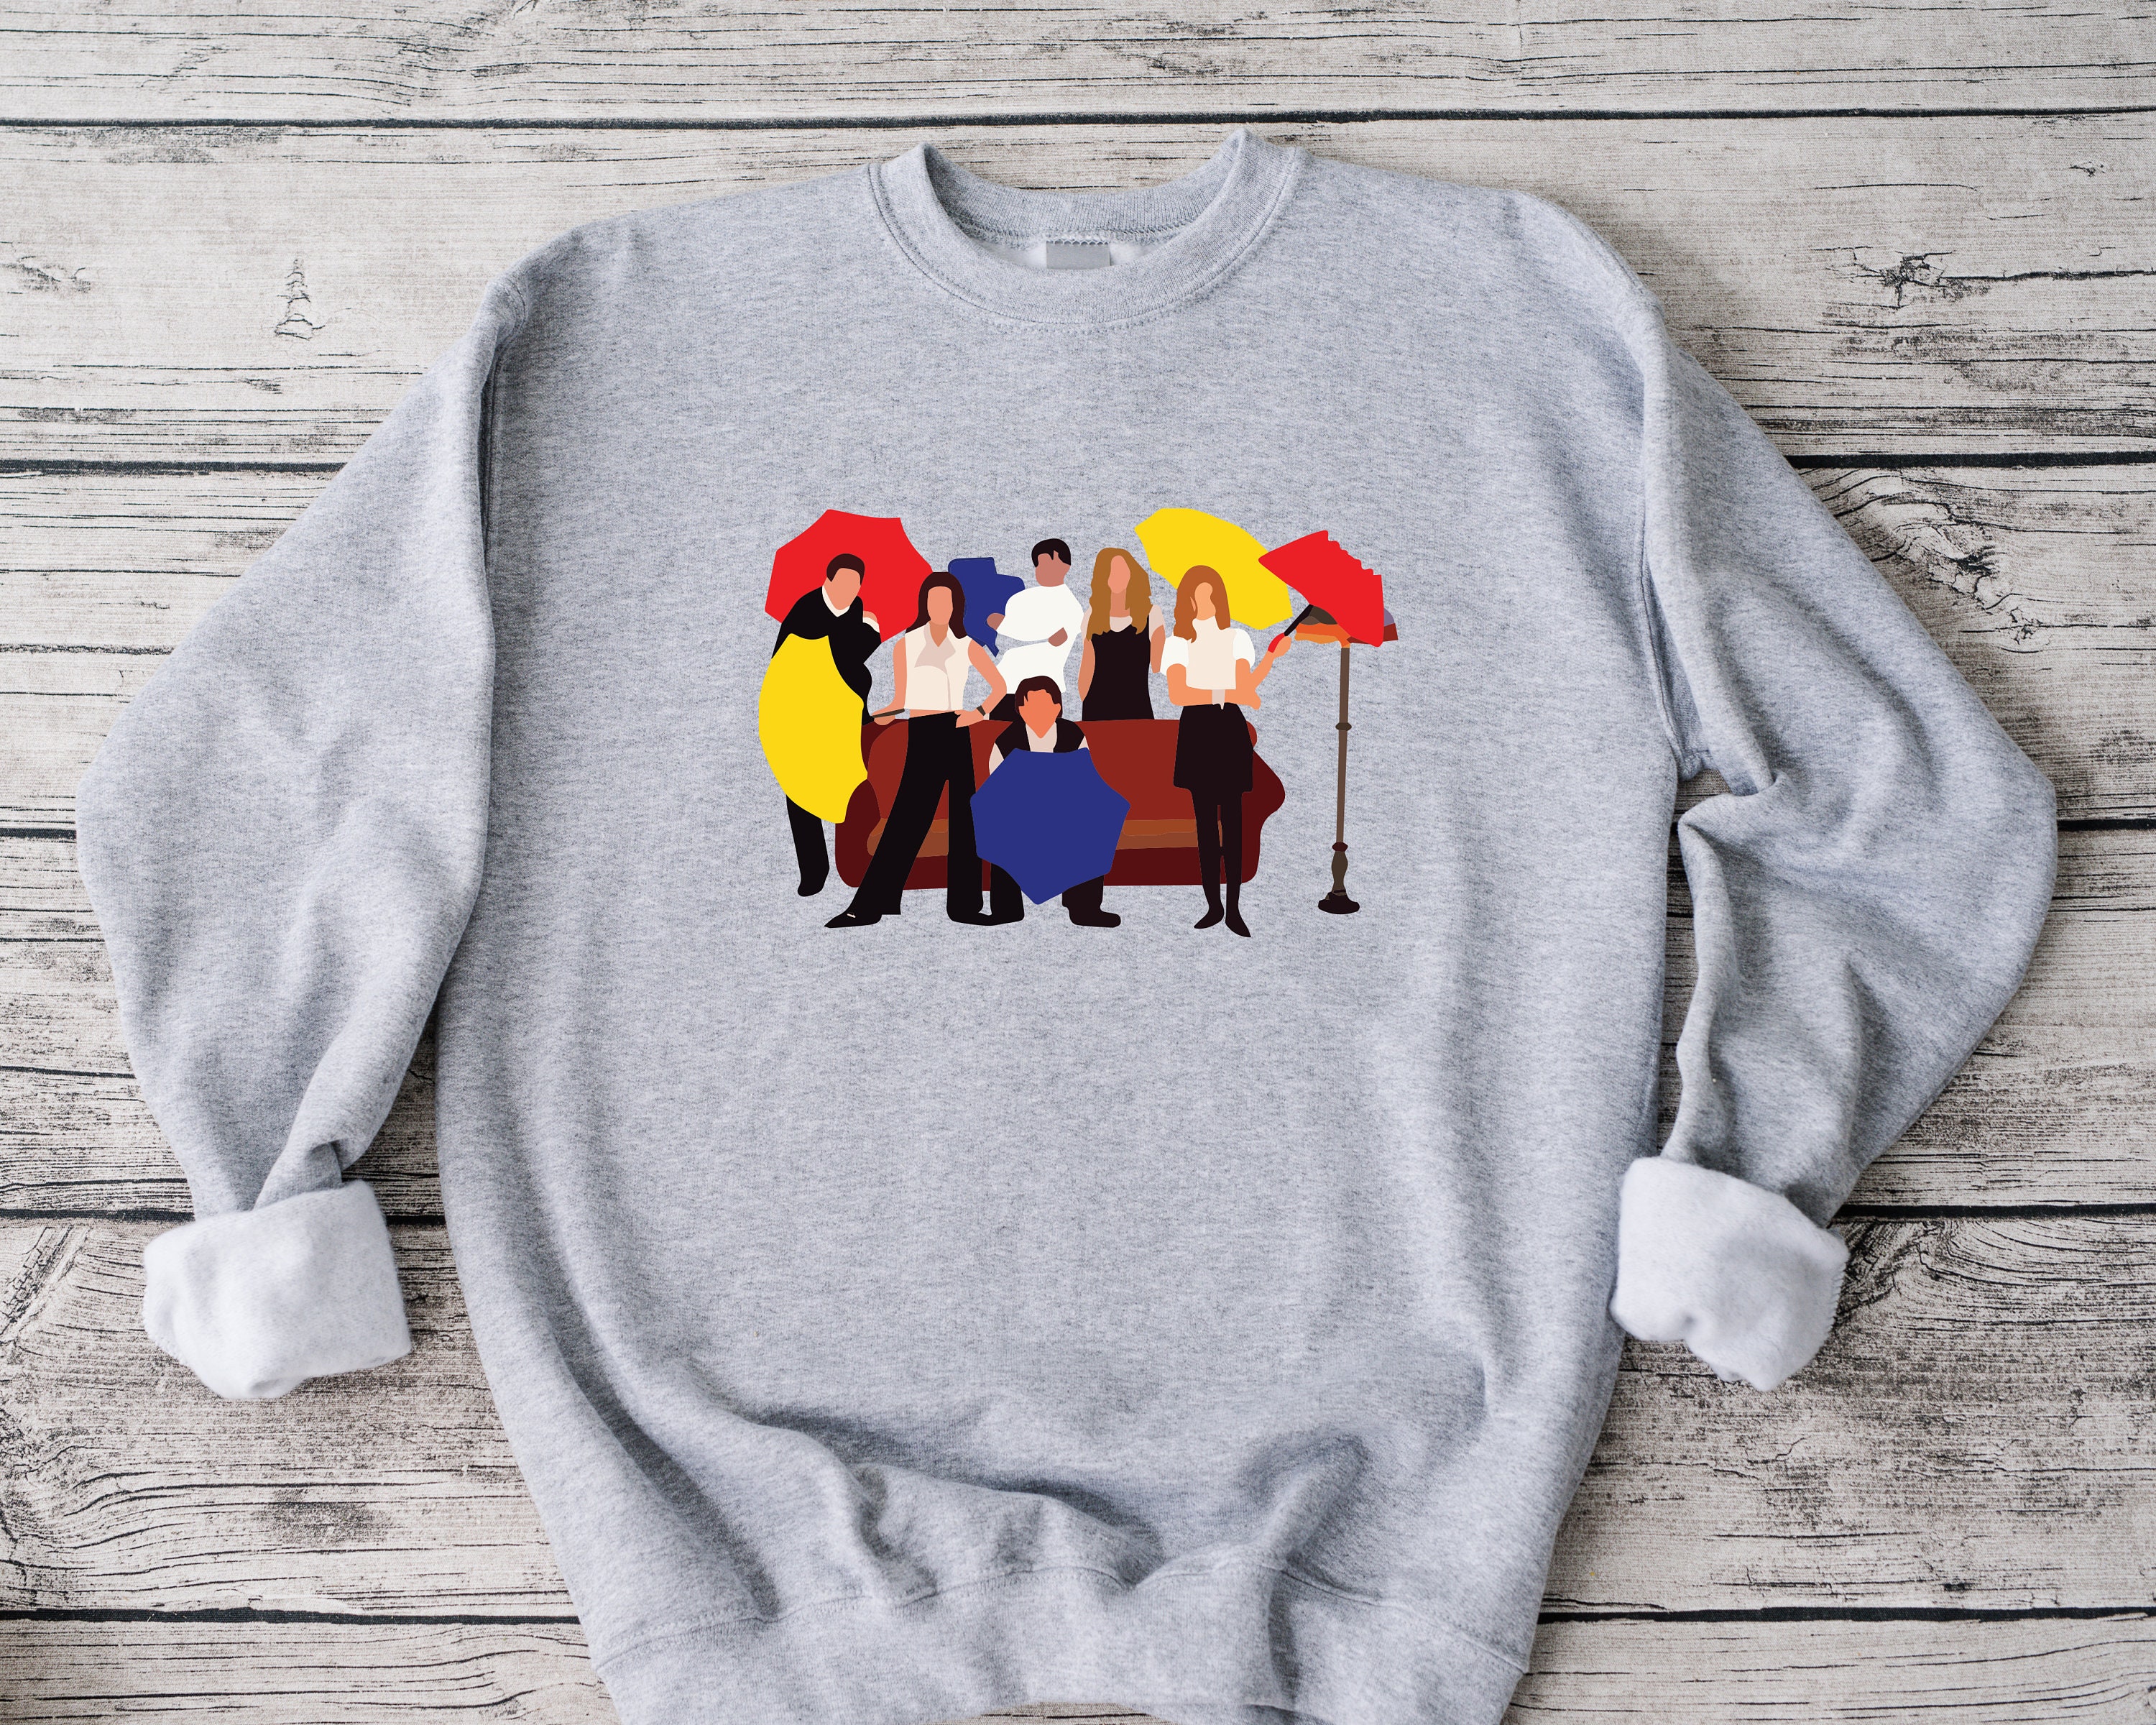 Storecloths 90s Friends Rachel Vintage Knicks Sweatshirt